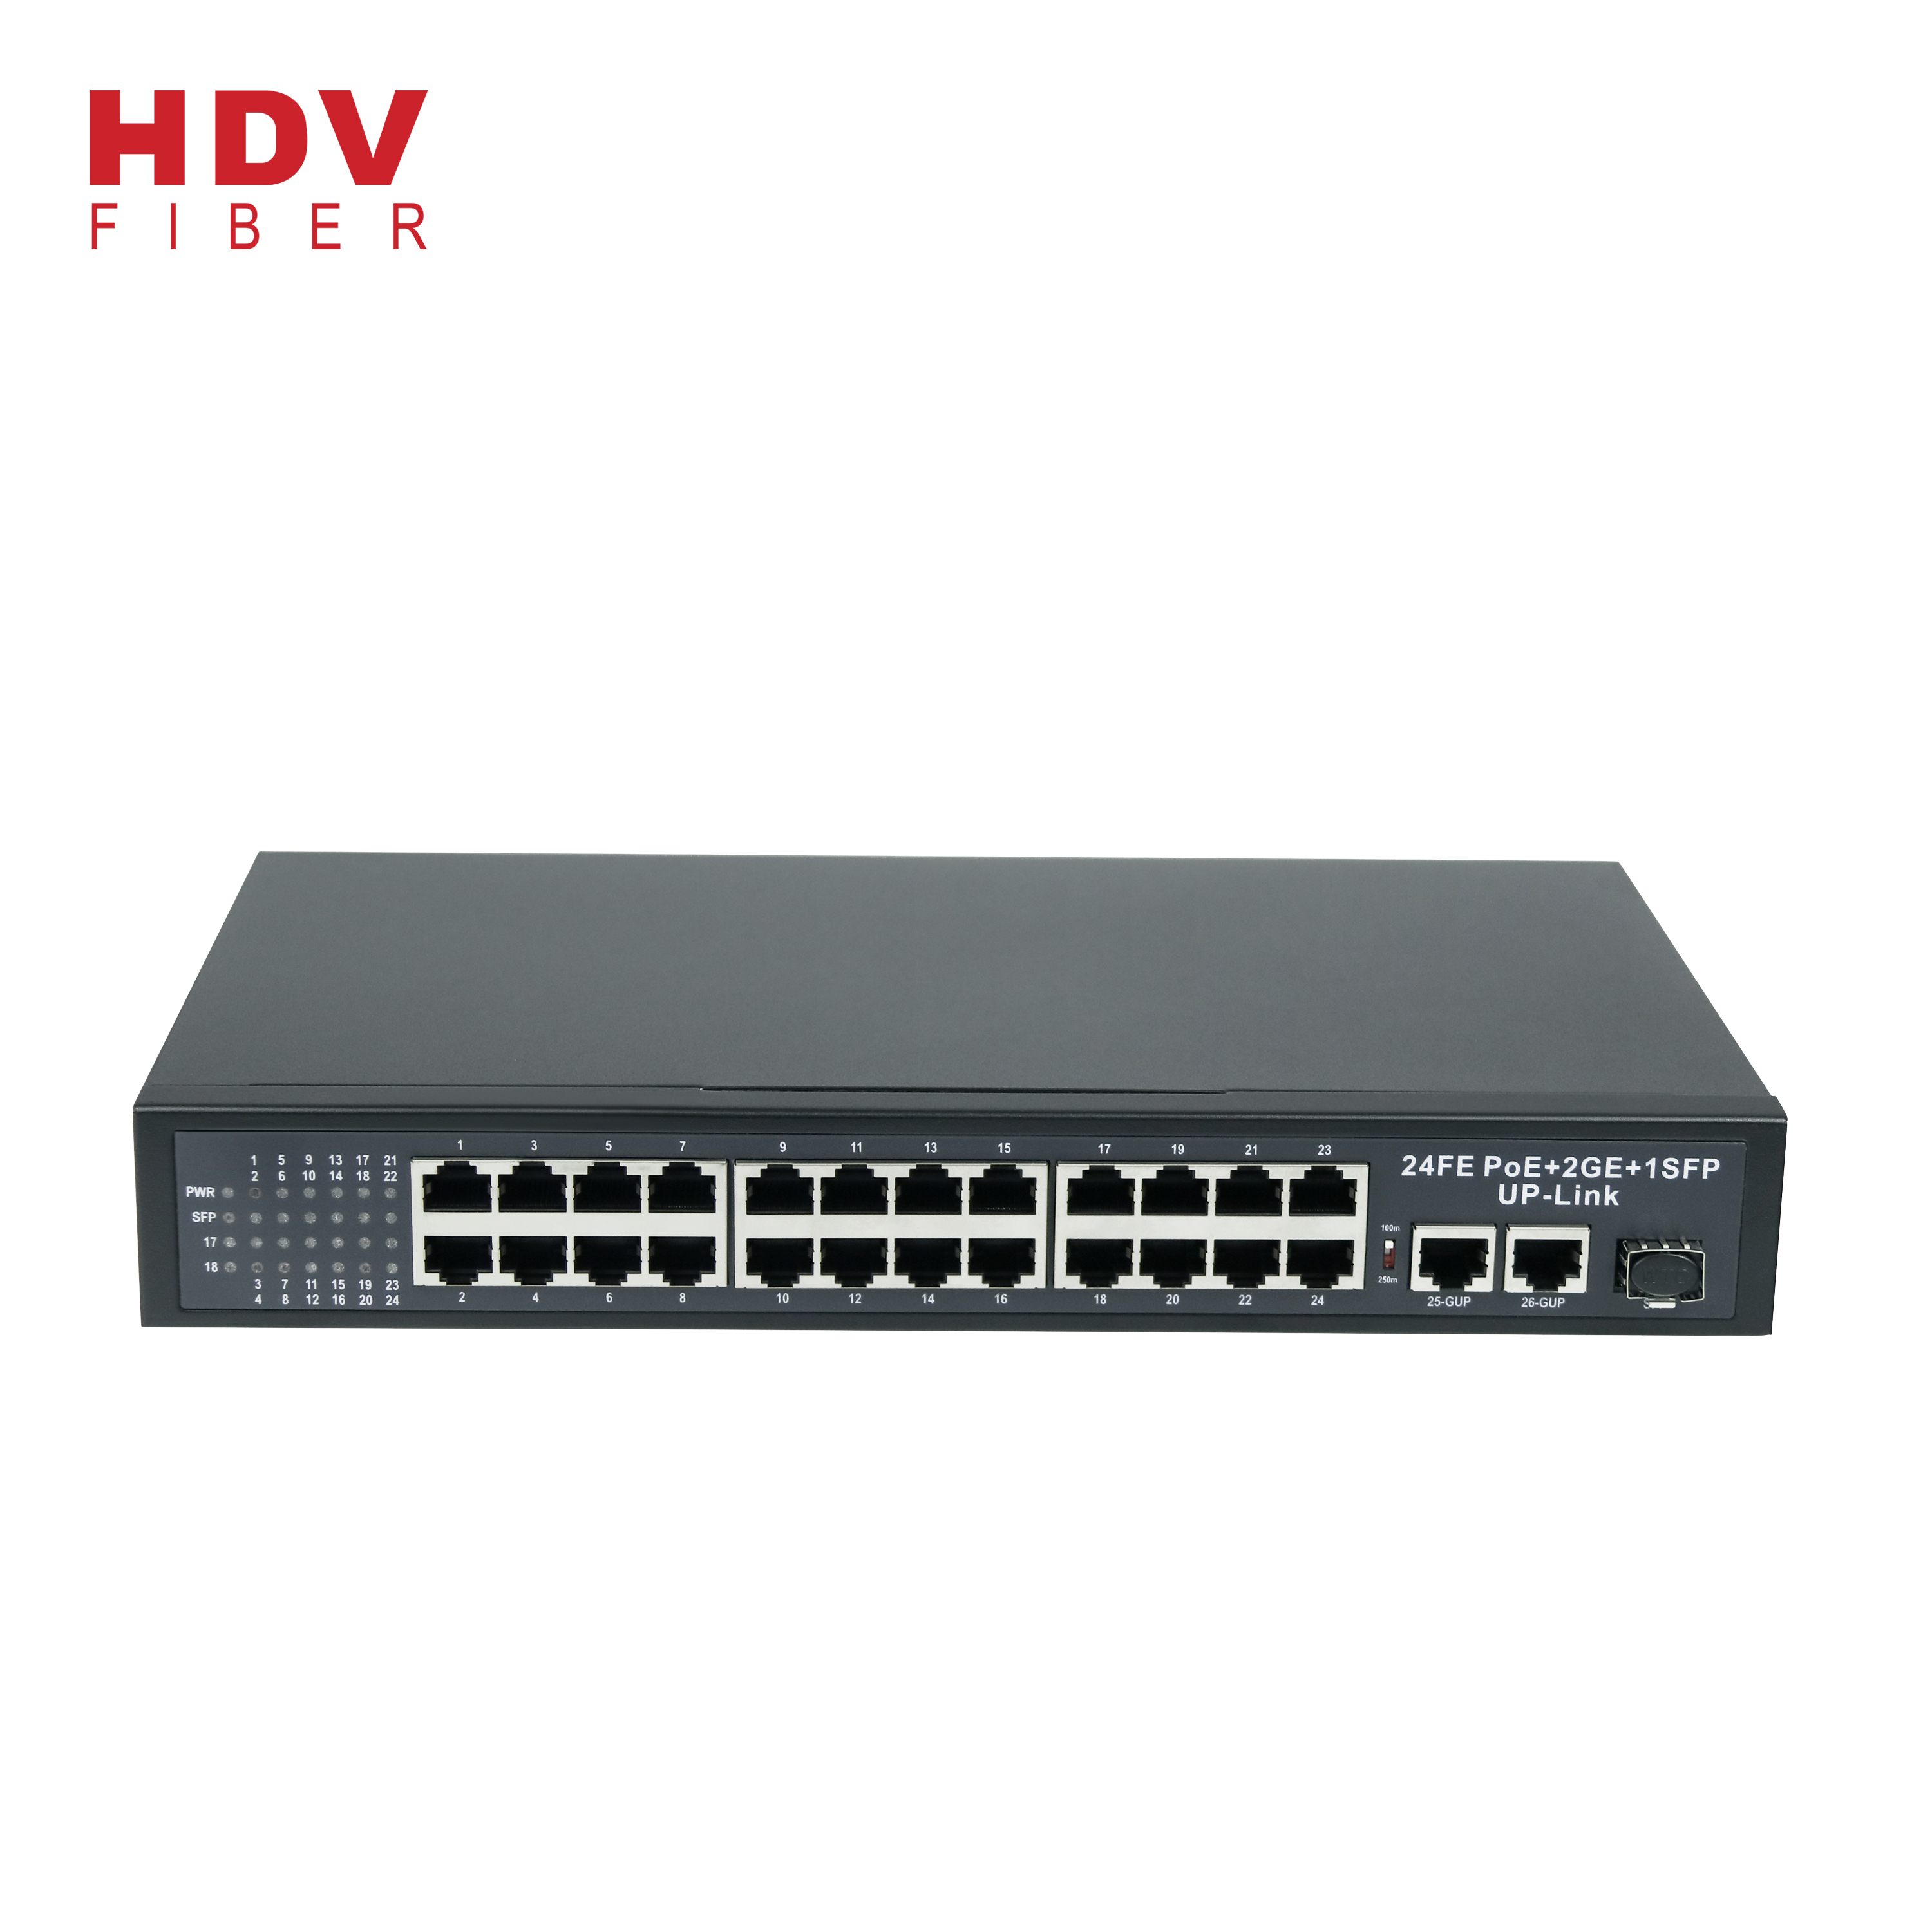 Ethernet DC 48V 6.25A 24FE POE+2GE UP+1G SFP POE Switch 24 Port Featured Image